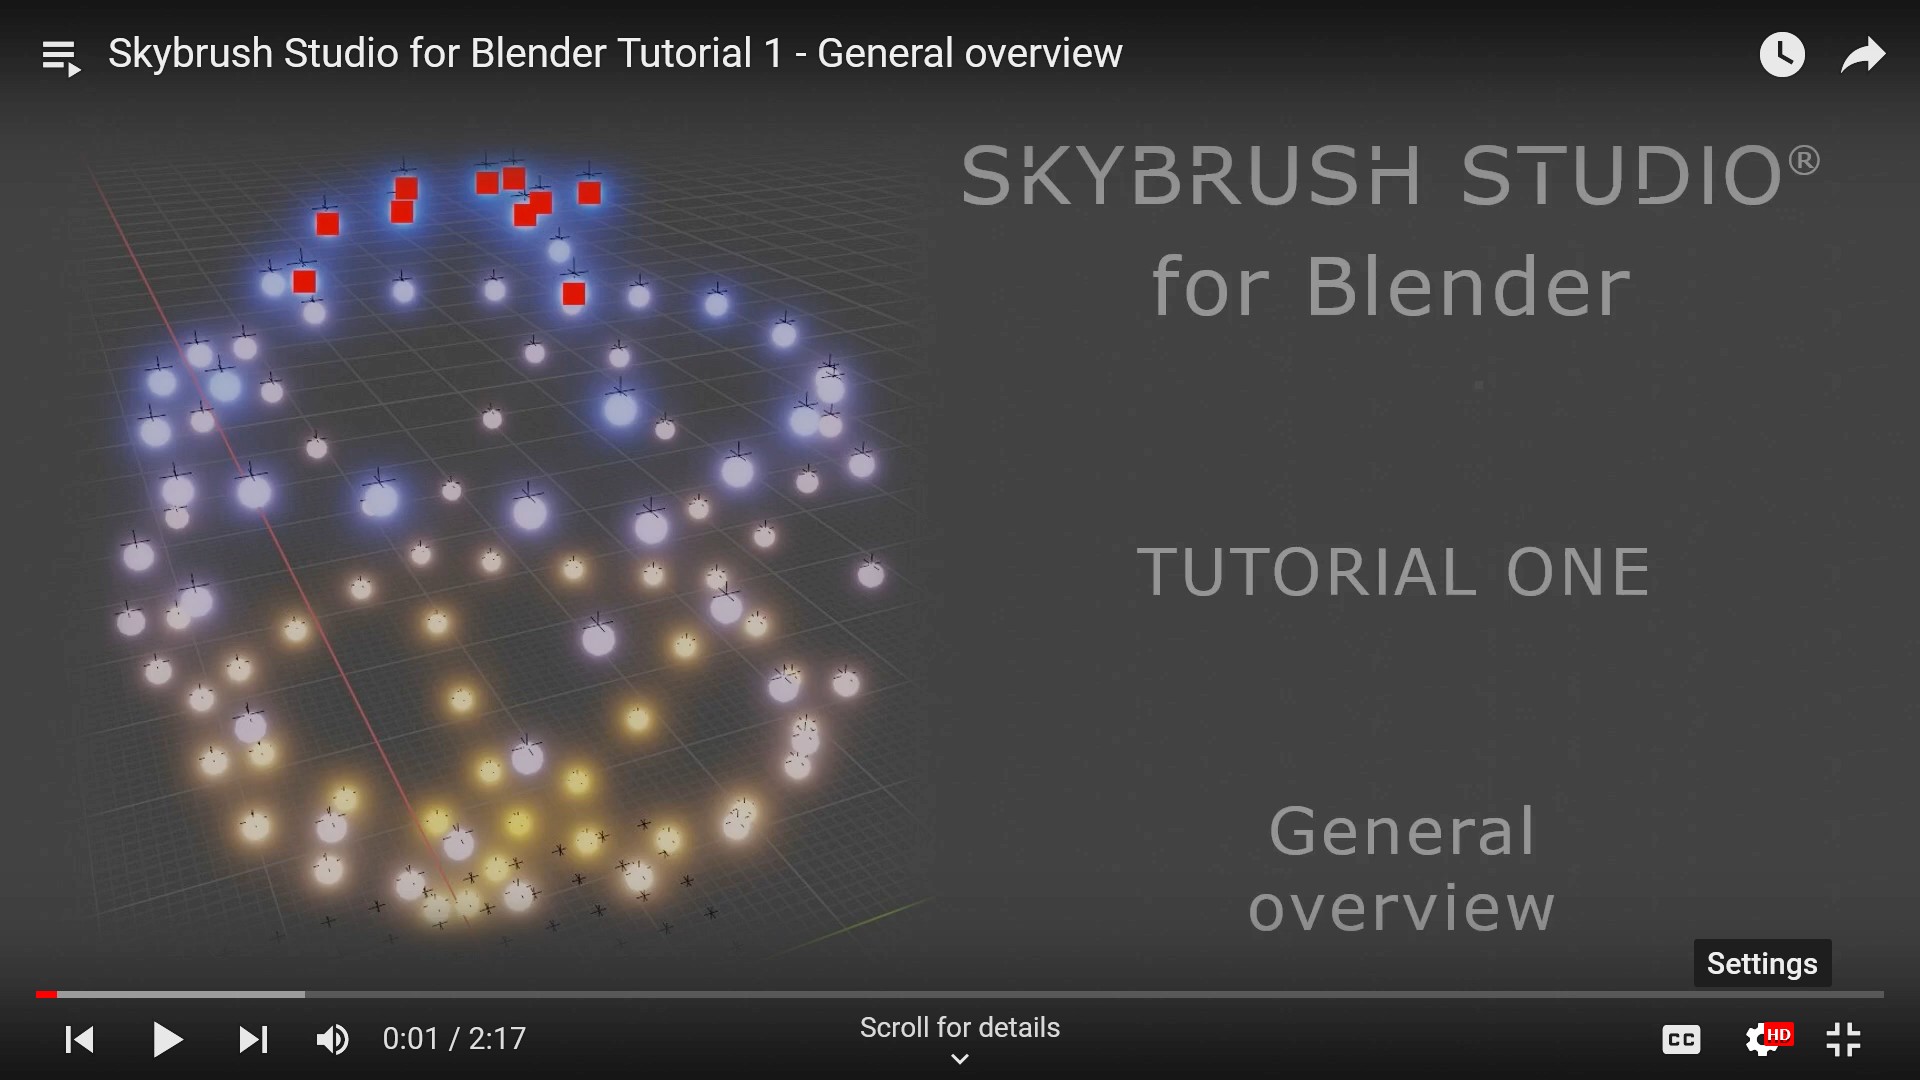 Skybrush Studio video tutorials now available